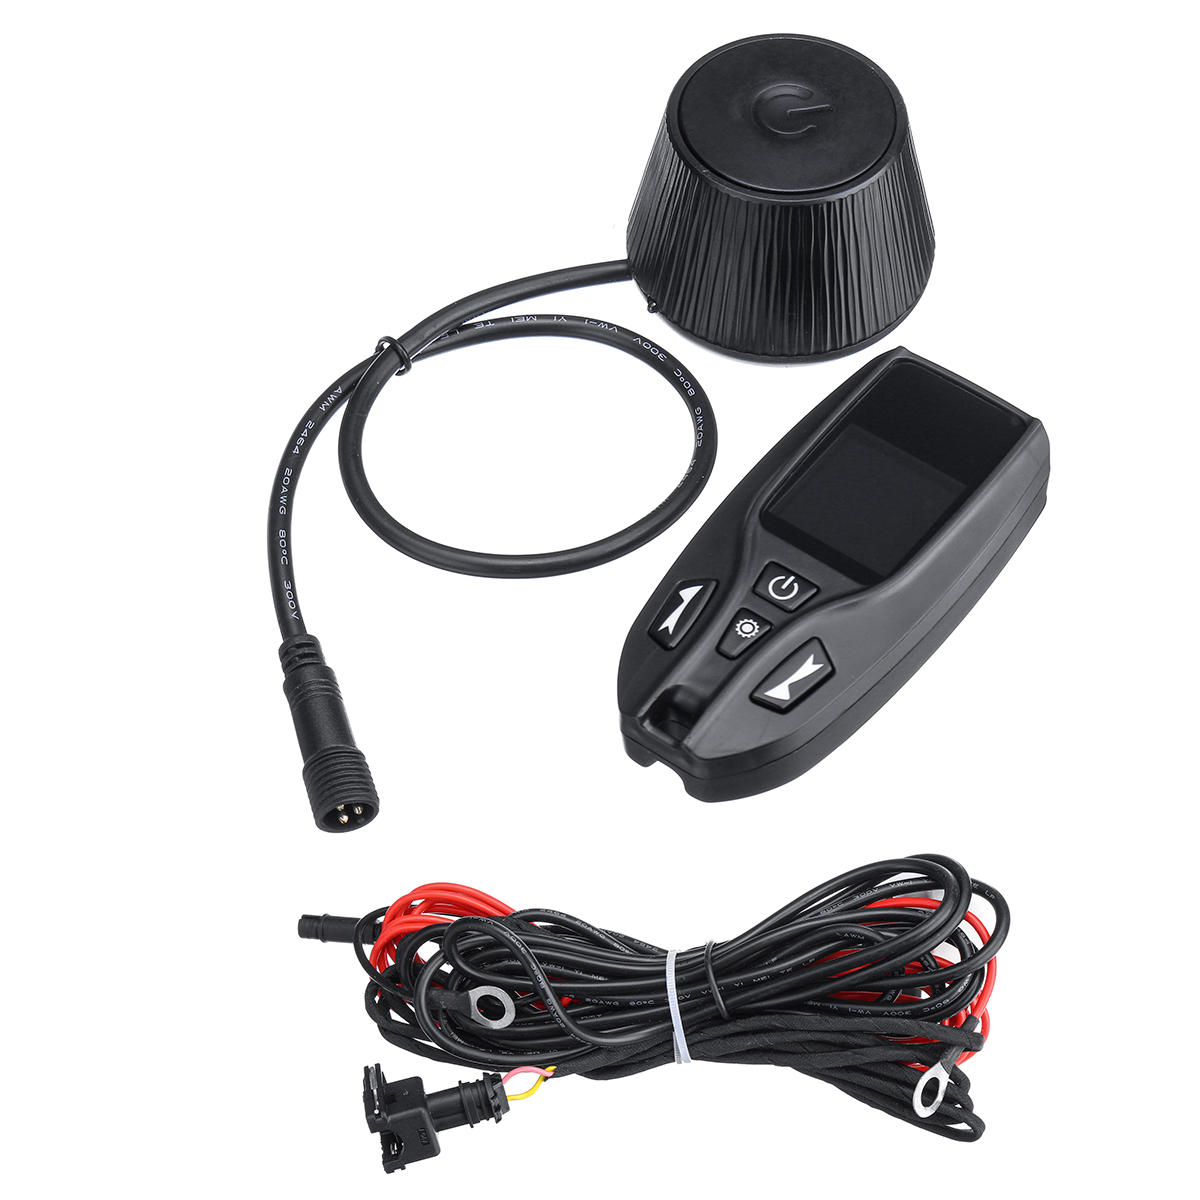 M-PENG 12V/24V Car Air Parking Heater Controller Switch Knob For Car Truck Air Diesel Heater 